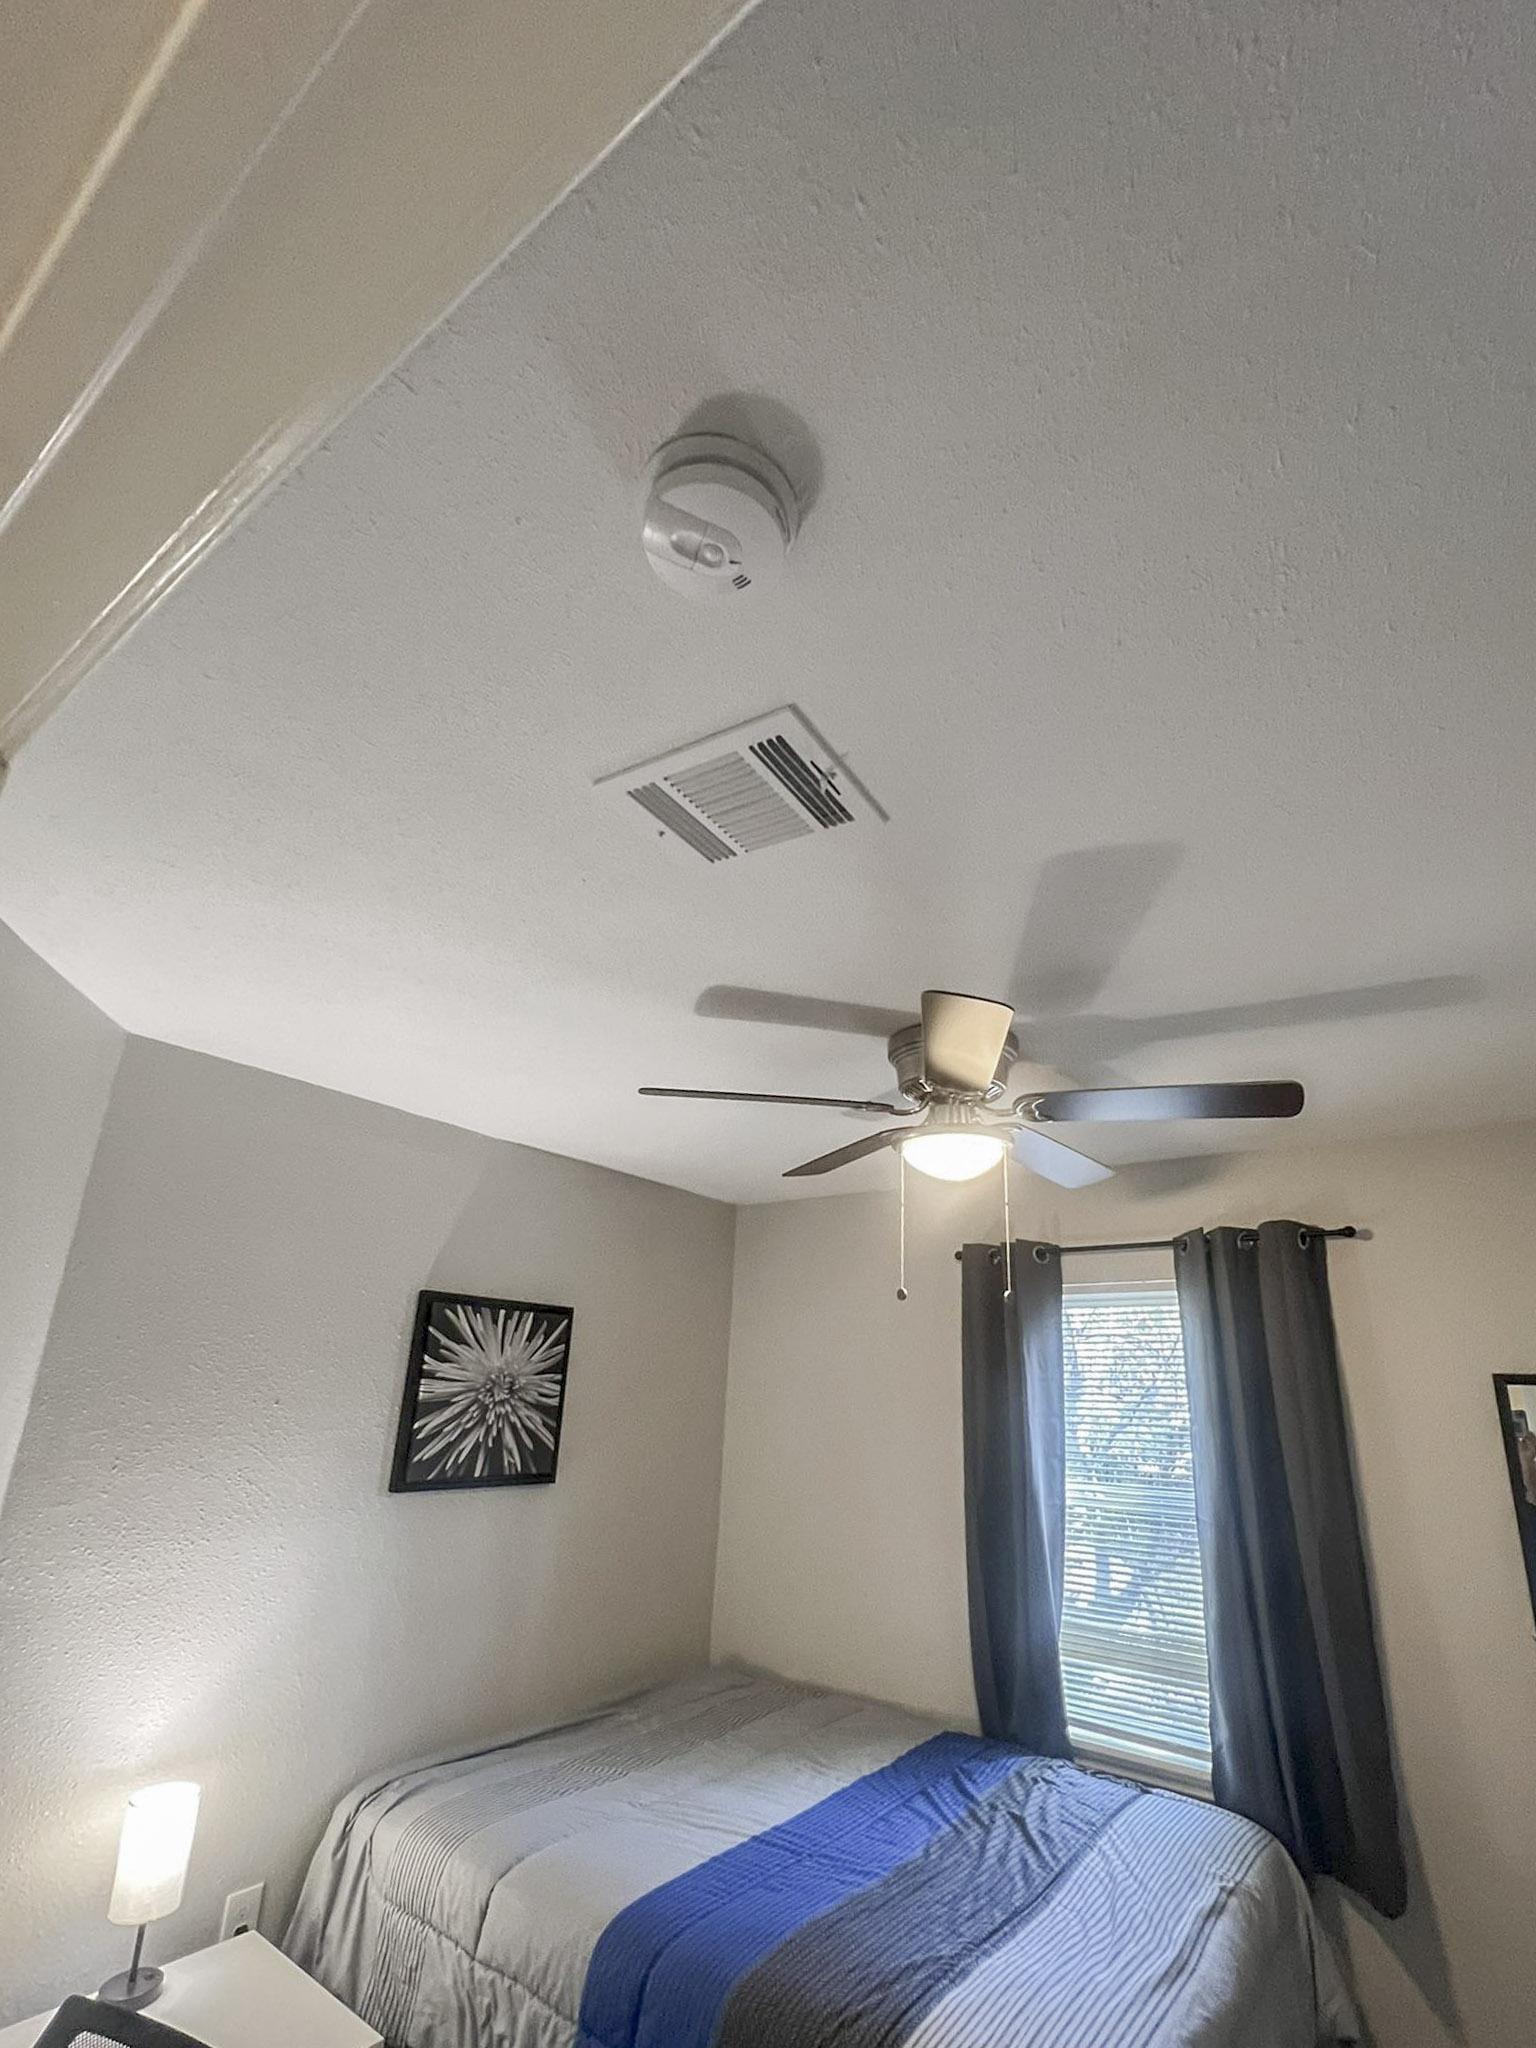 bedroom, detected:bed, ceiling fan, window blind